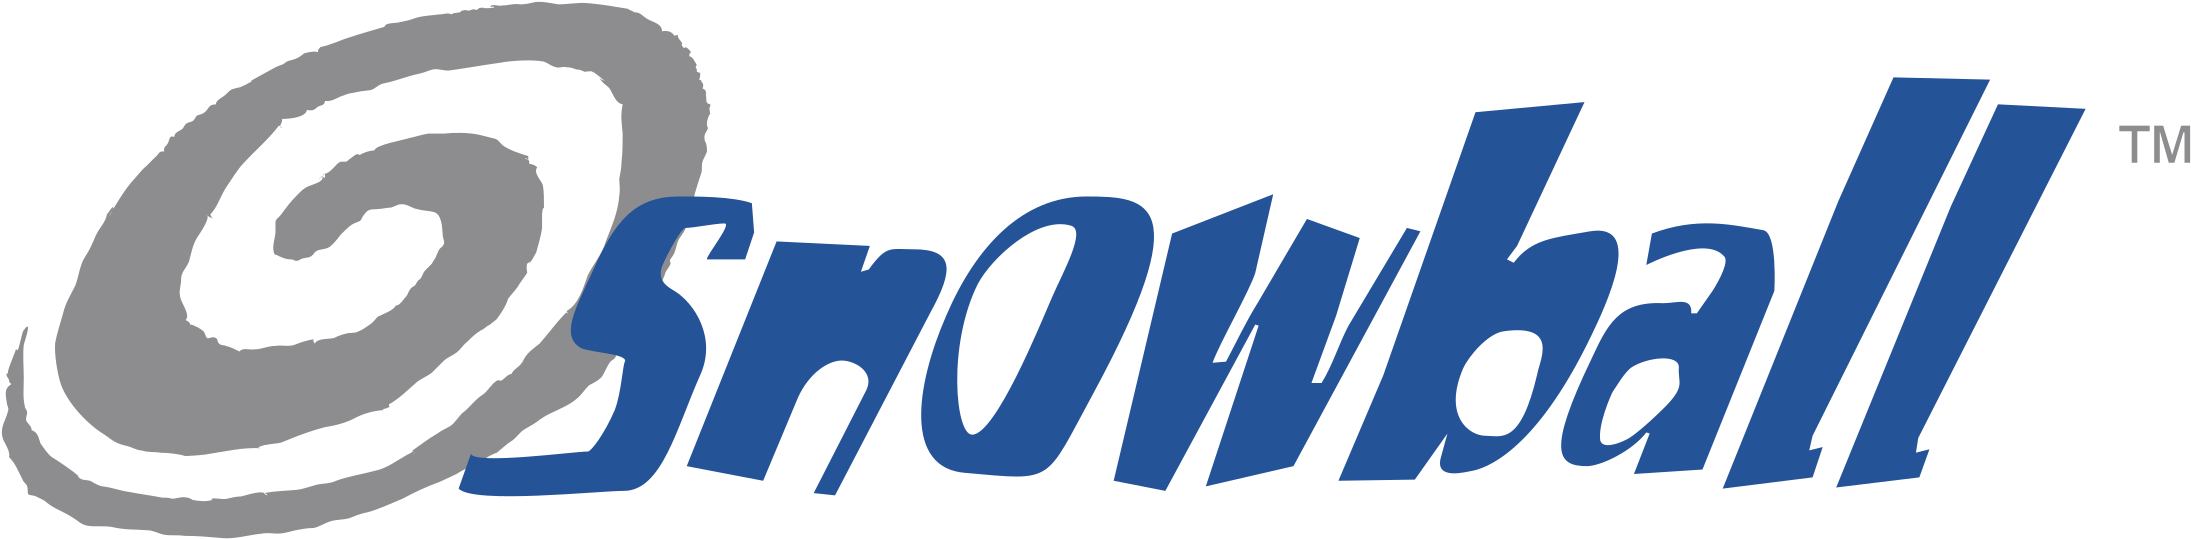 Snowball Logo Png Transparent - Snowball Com Logo (2400x2400), Png Download